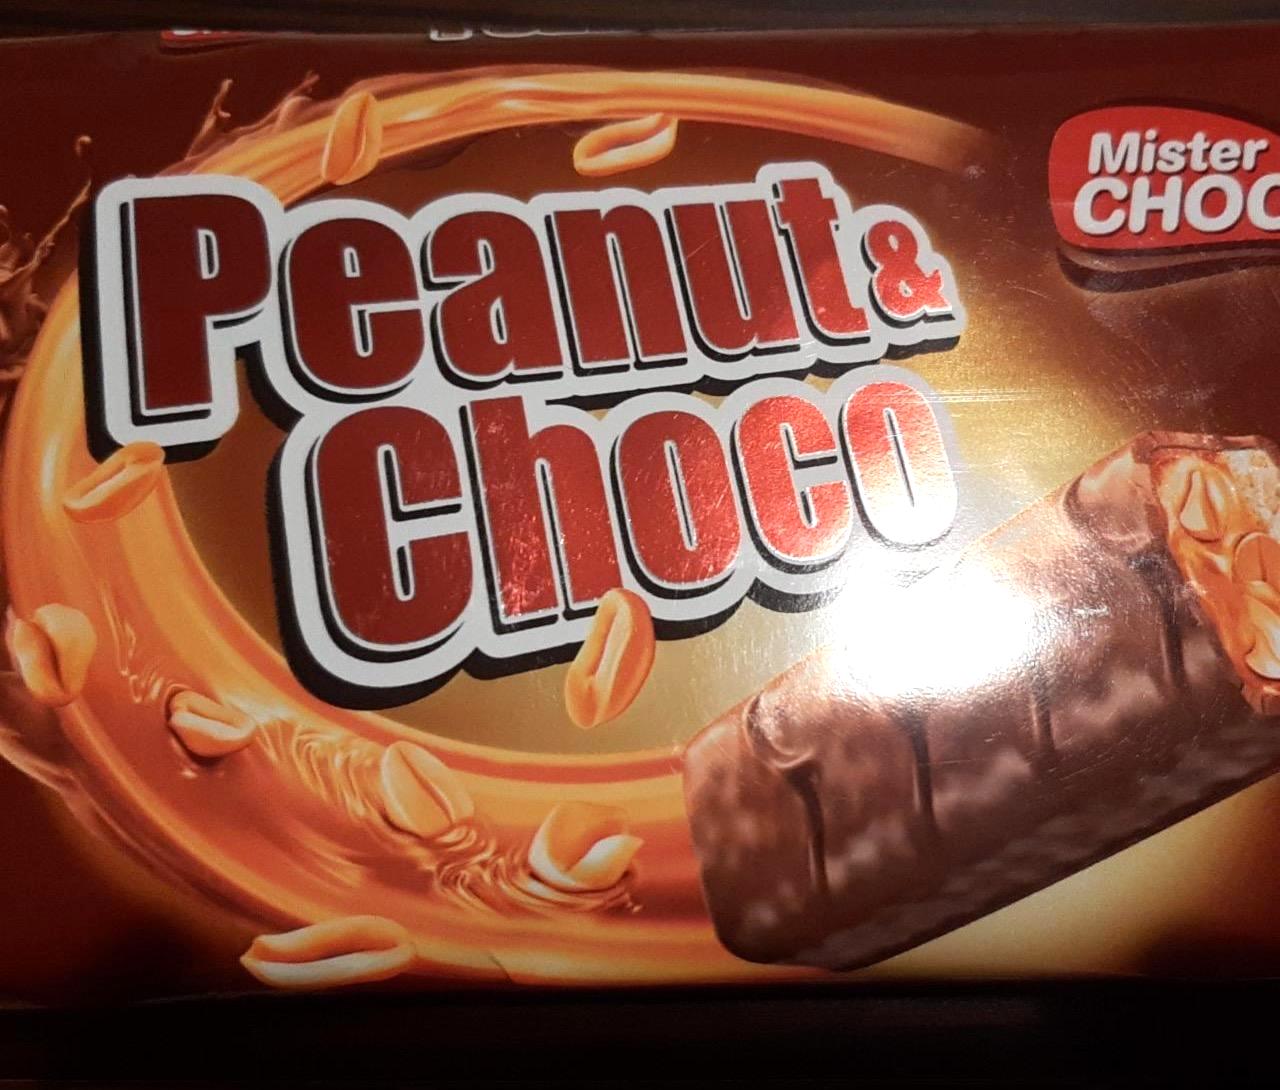 Képek - Peanut & Choco Mister Choc